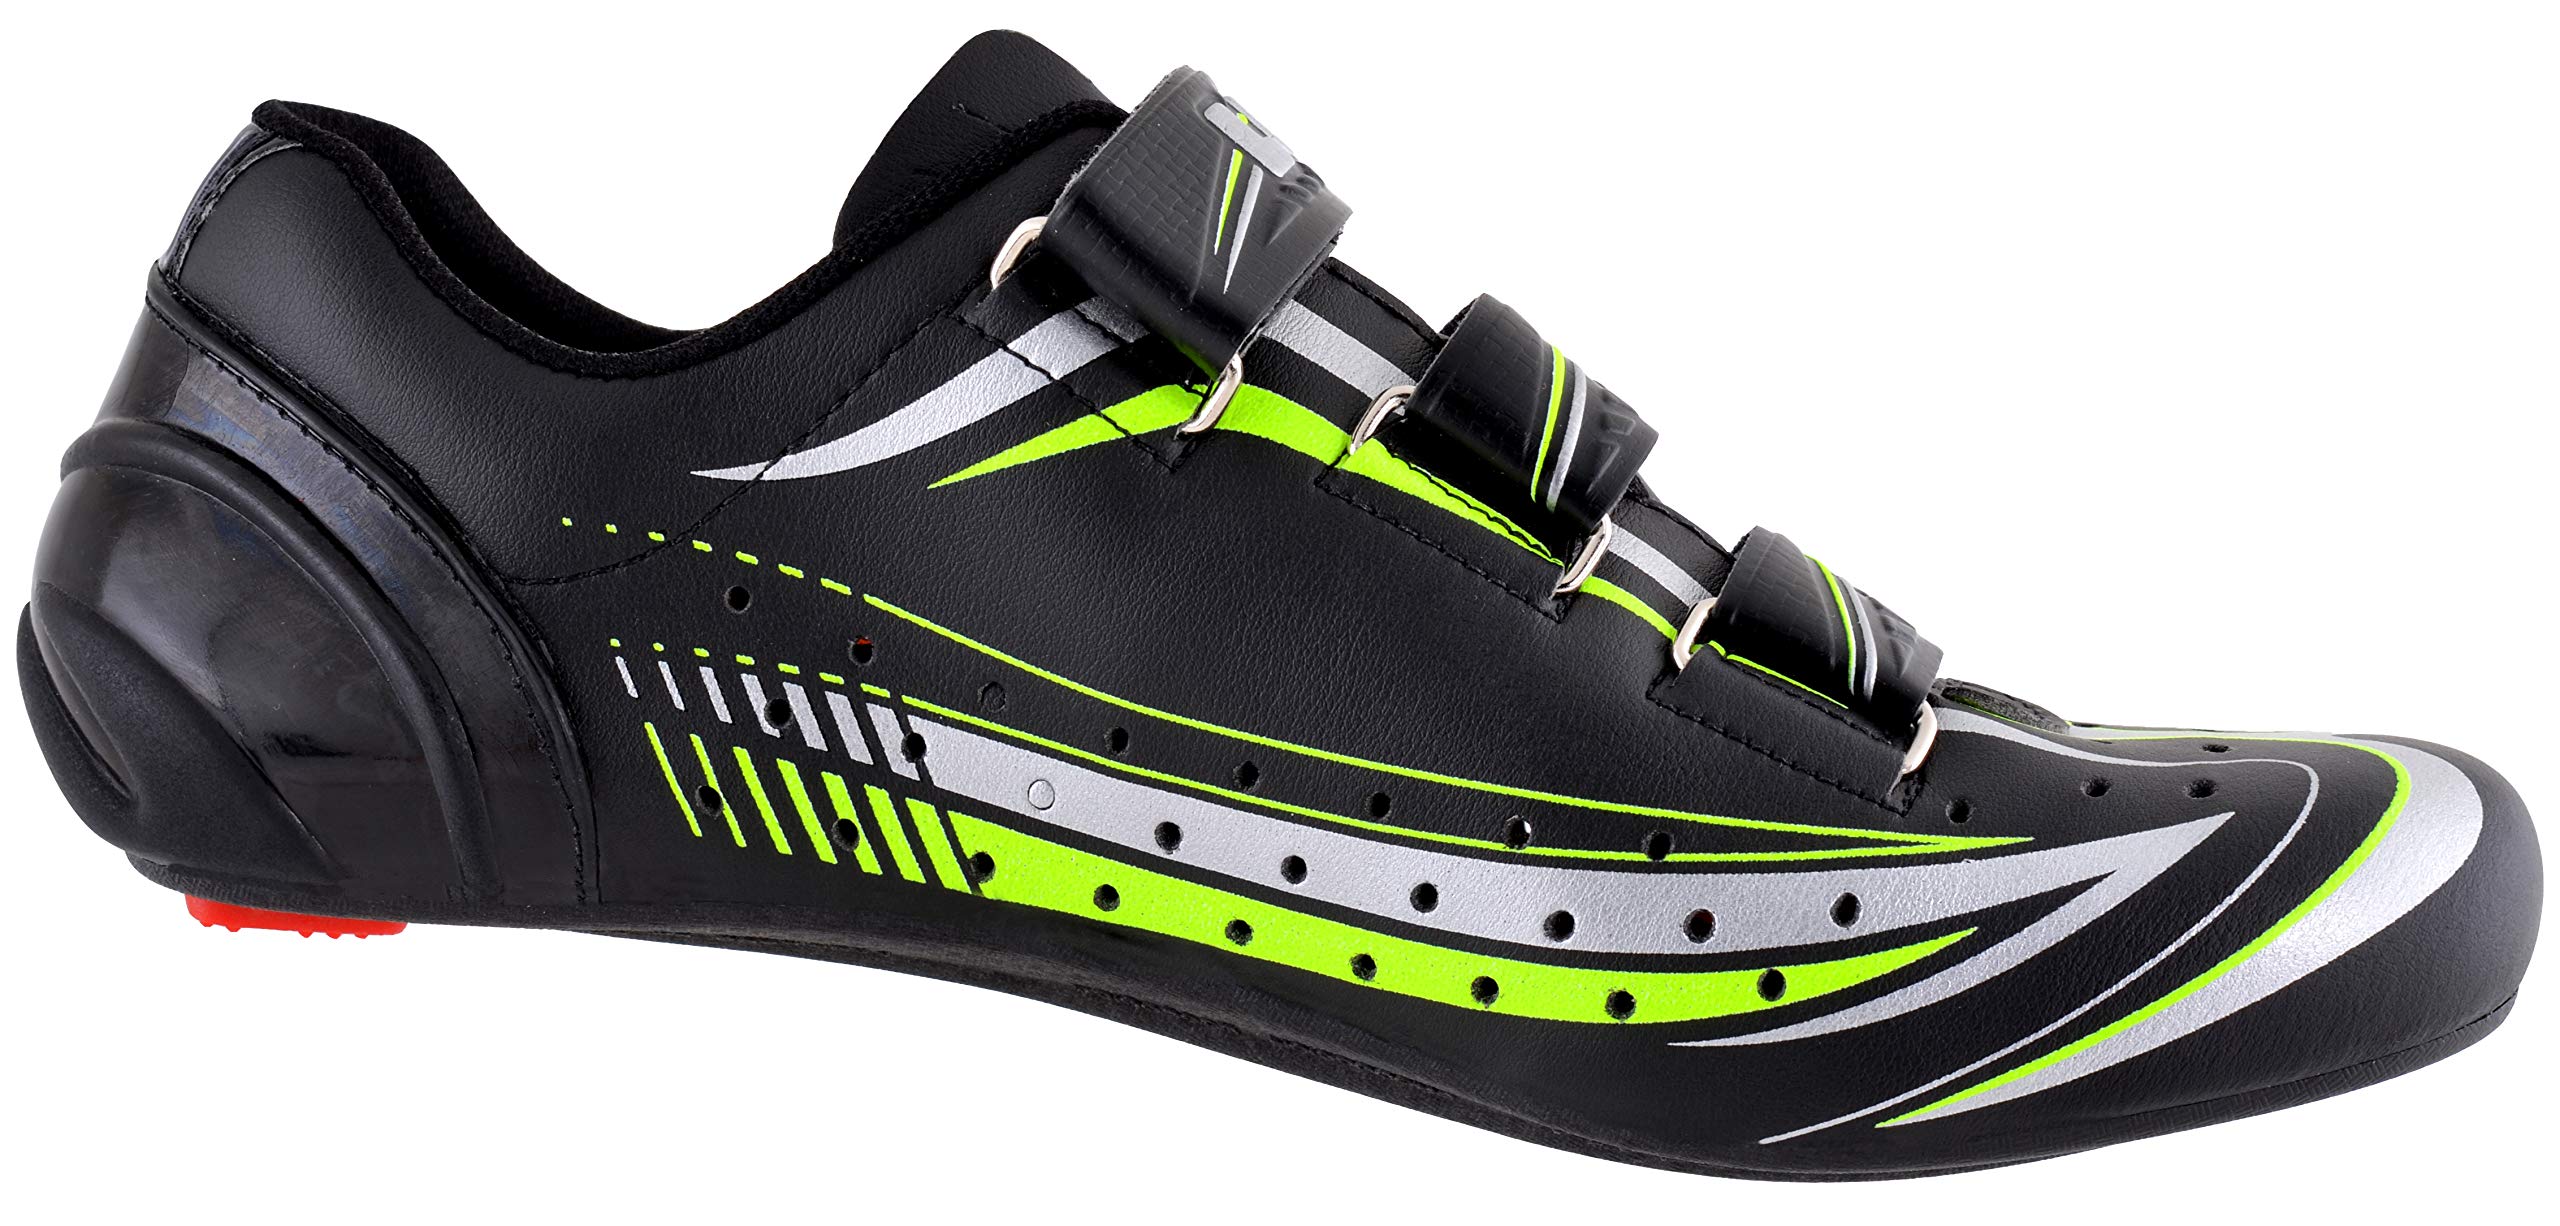 LUCK Unisex_Adult Mega Cycling Shoe, Black, 45 EU